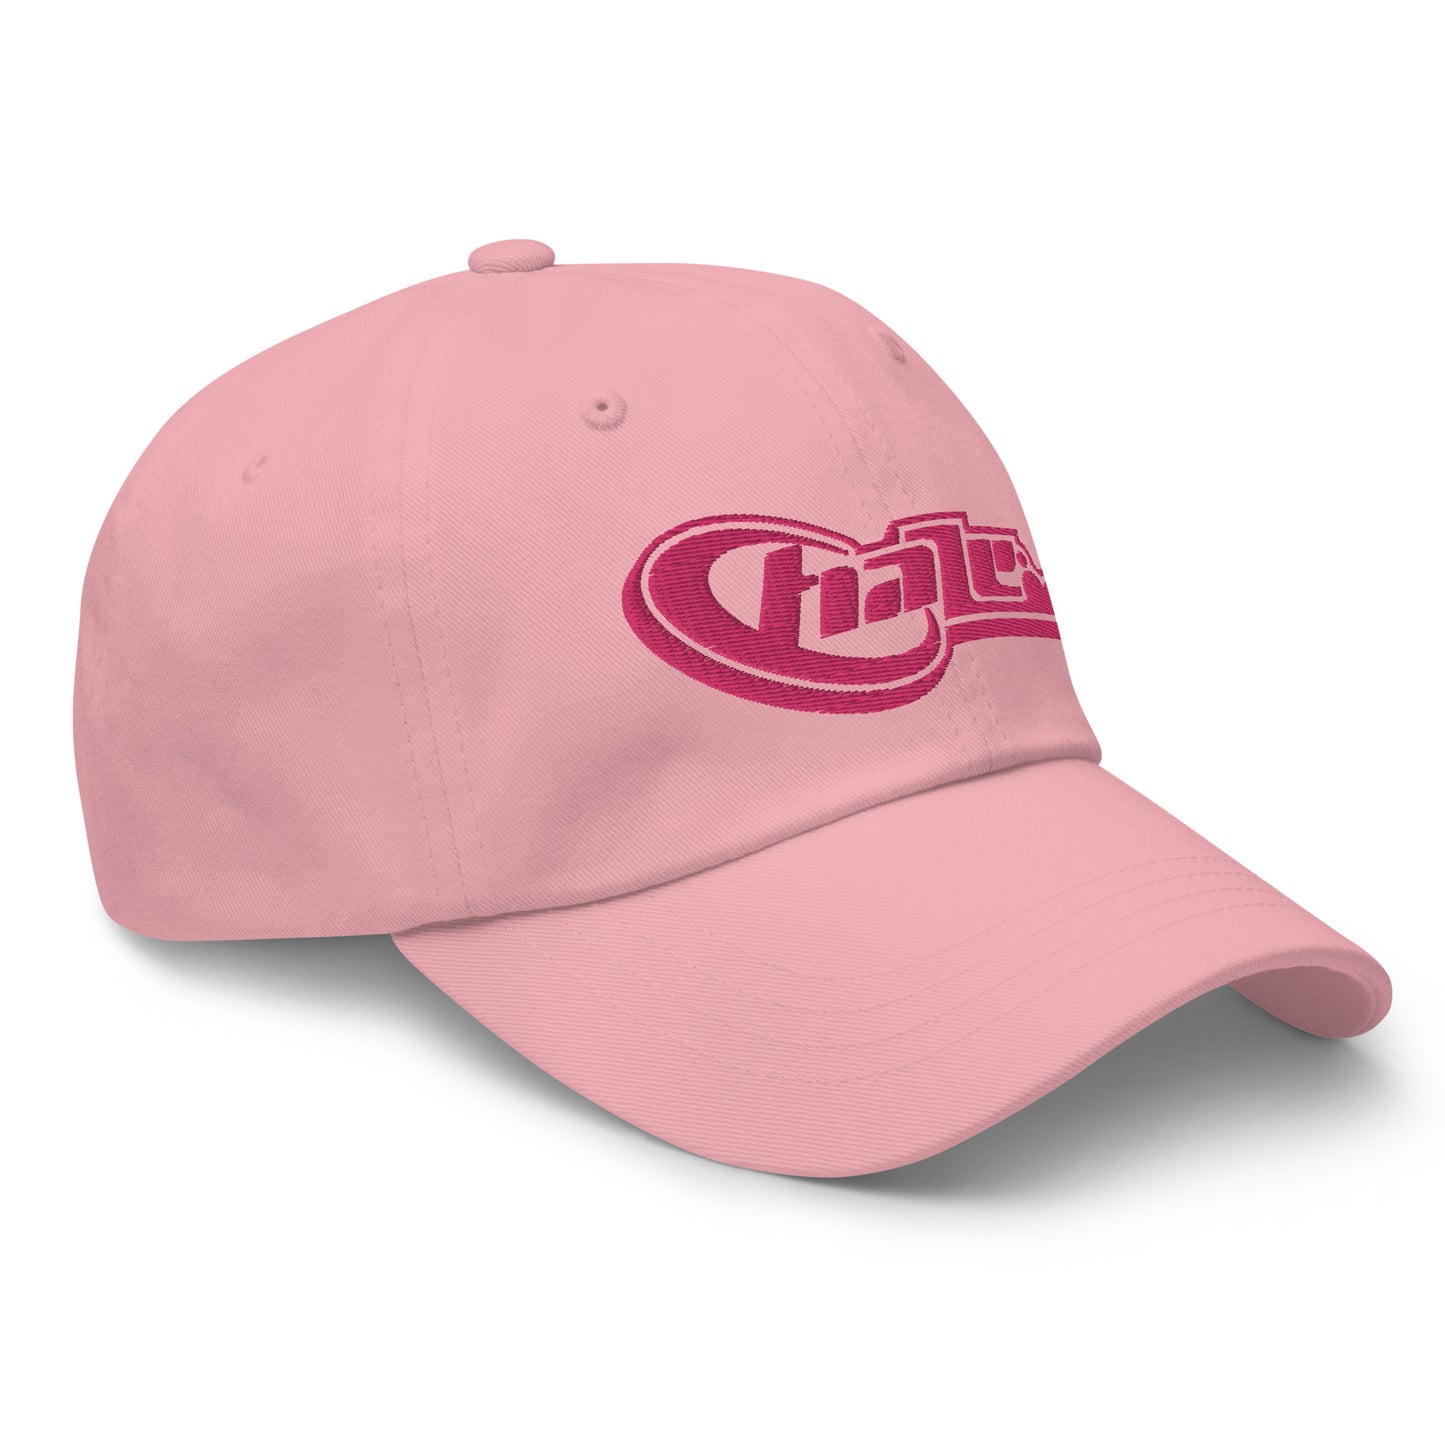 Pink "Cloud" Hat